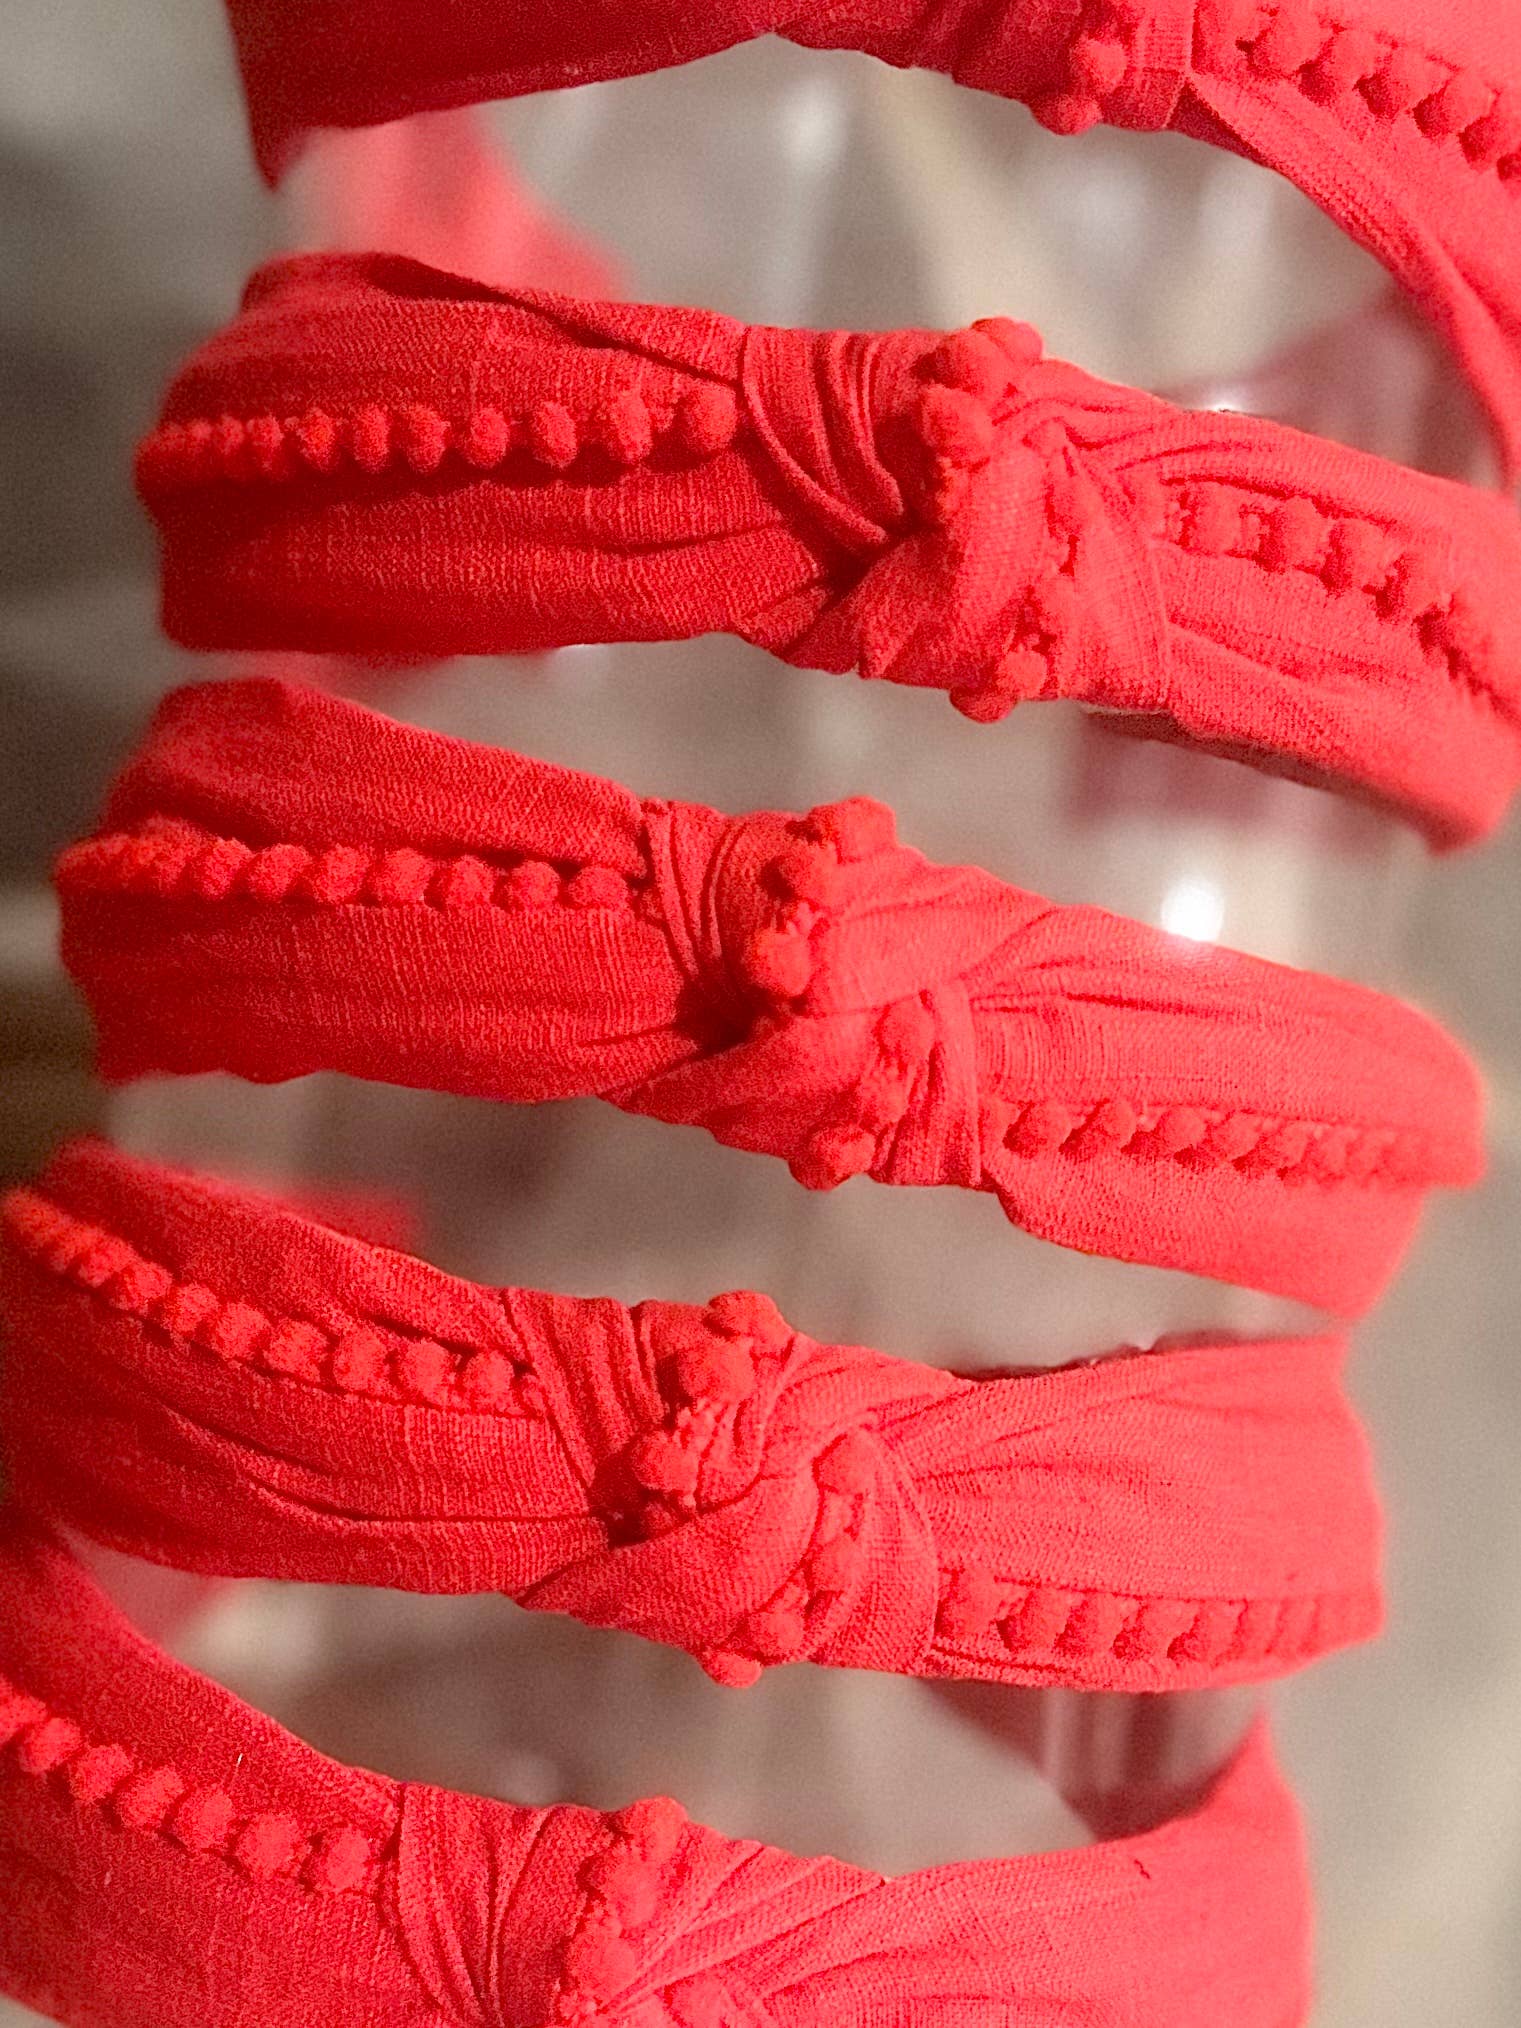 Lolo Headbands and Accessories - Preppy Pom Knot Headband - Red